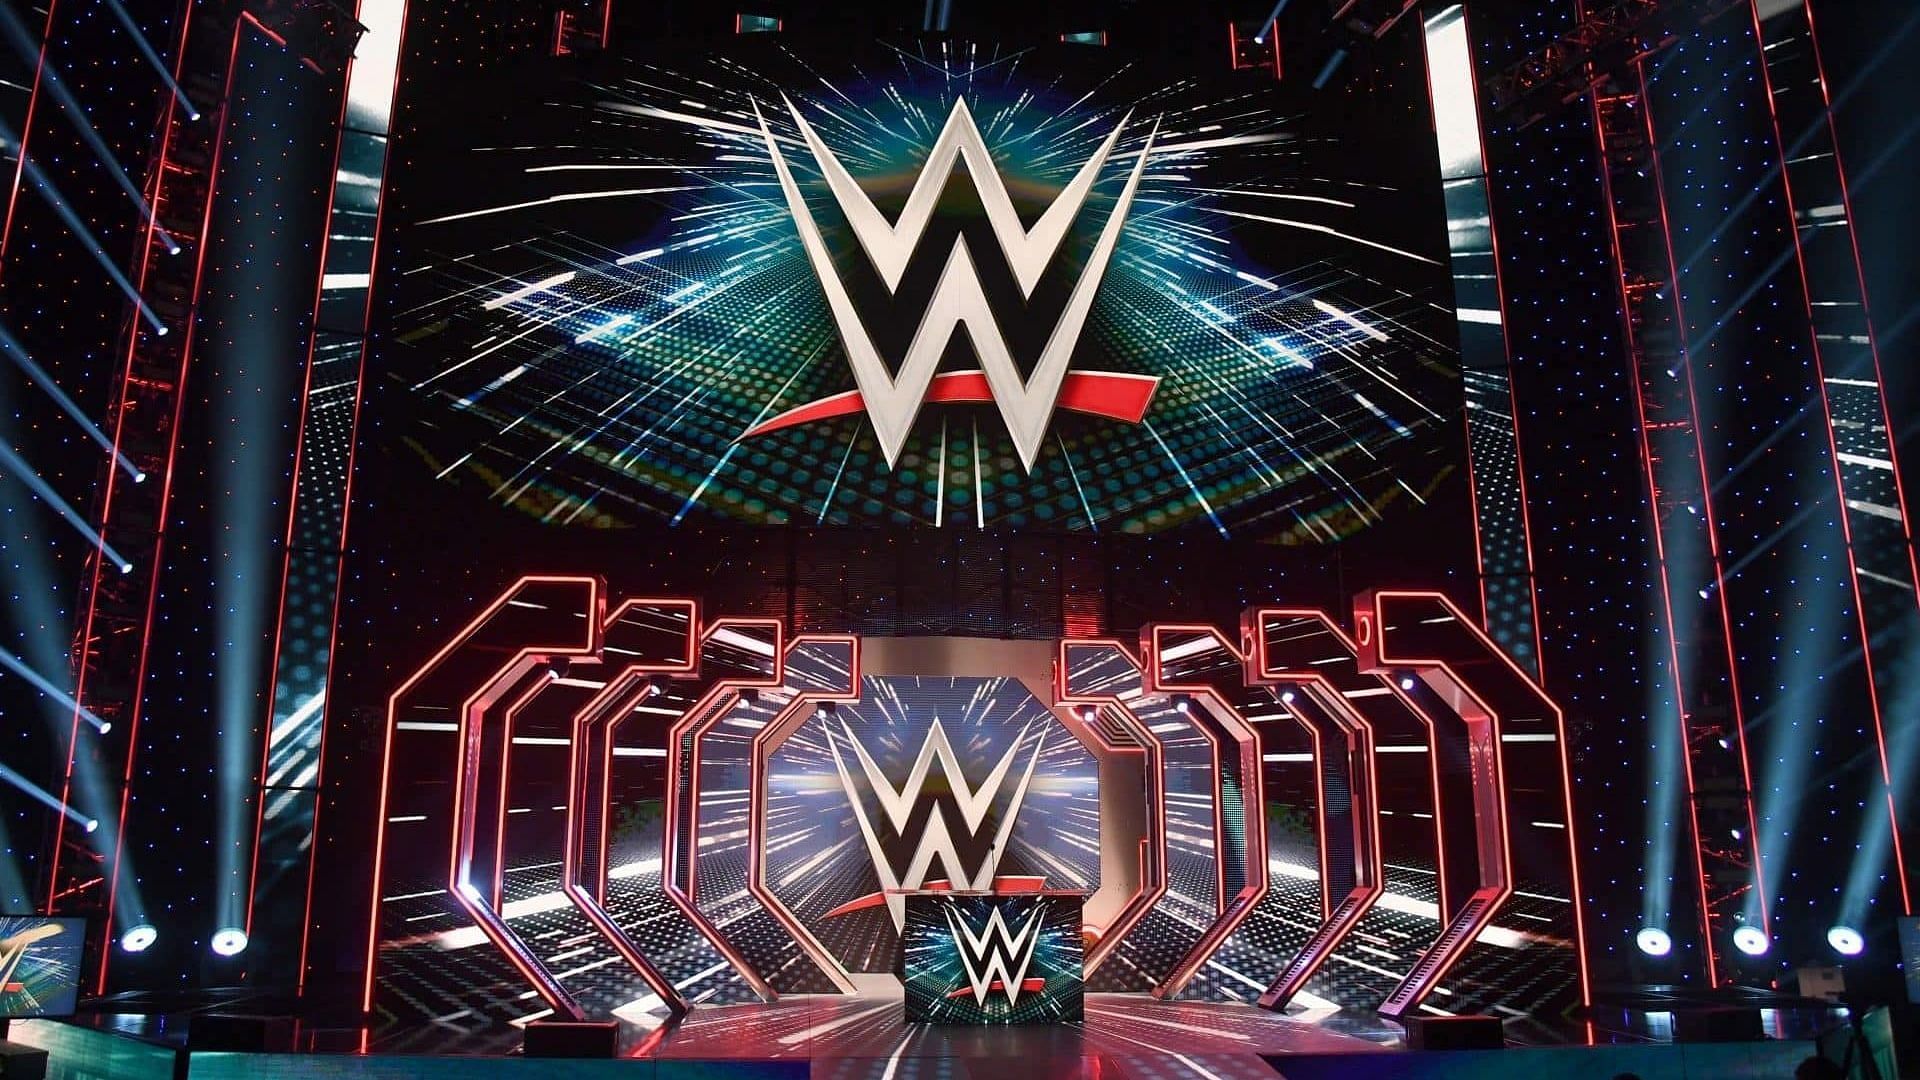 WWE logos and set/stage on display inside arena